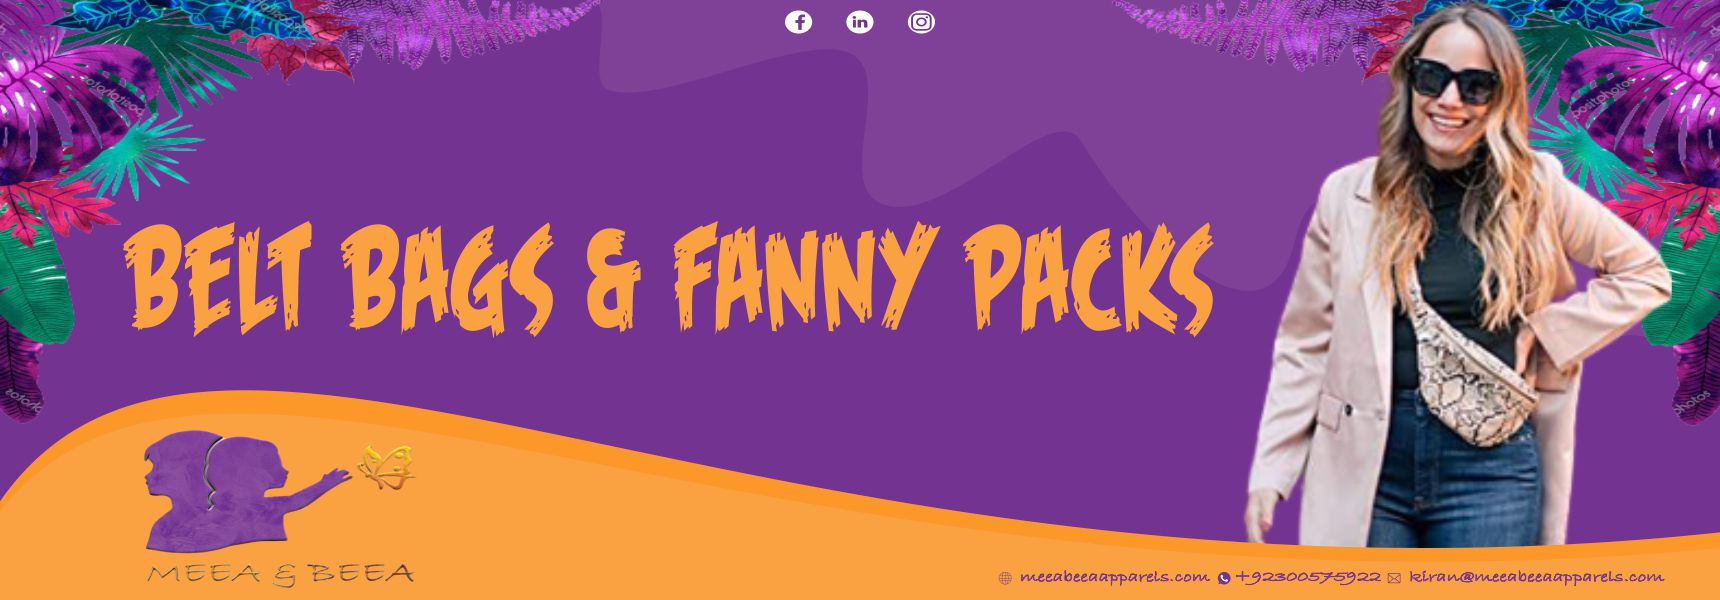 Belt Bags & Fanny Packs